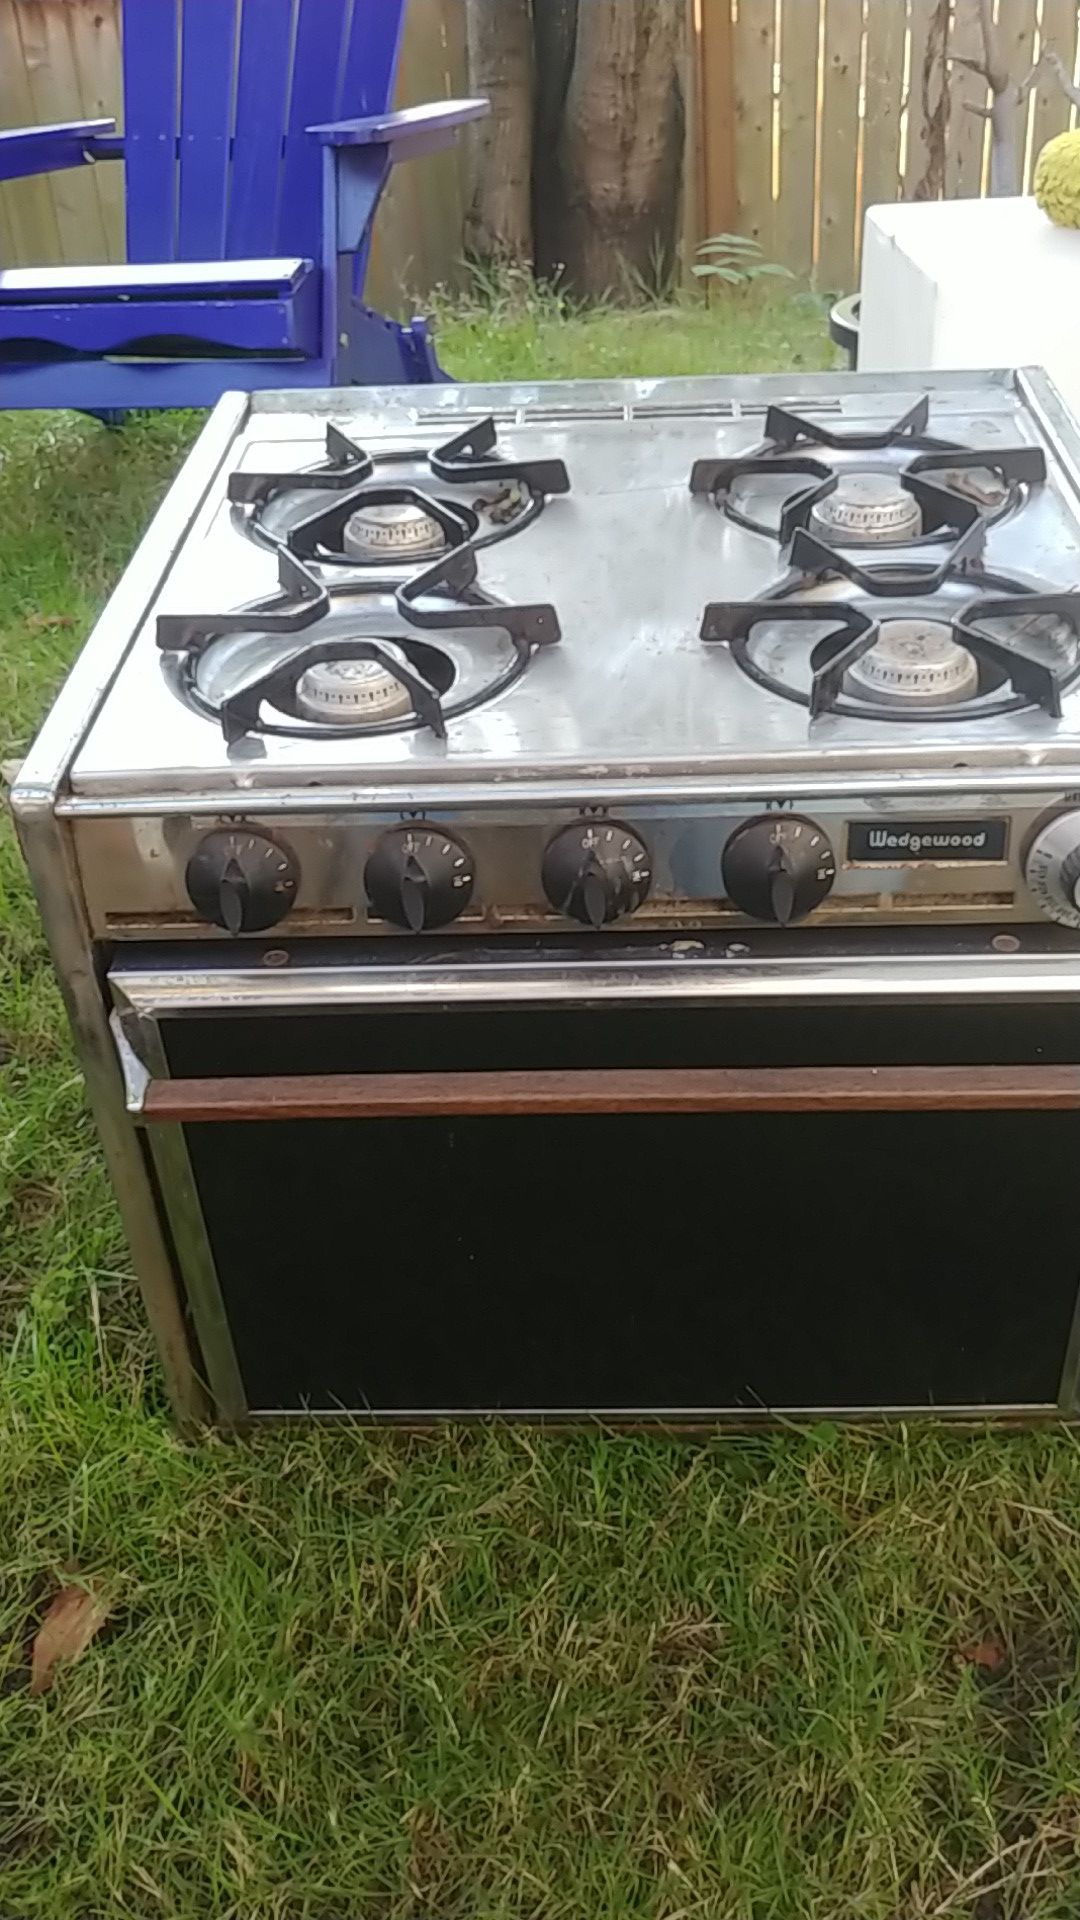 Wedgewood RV stove